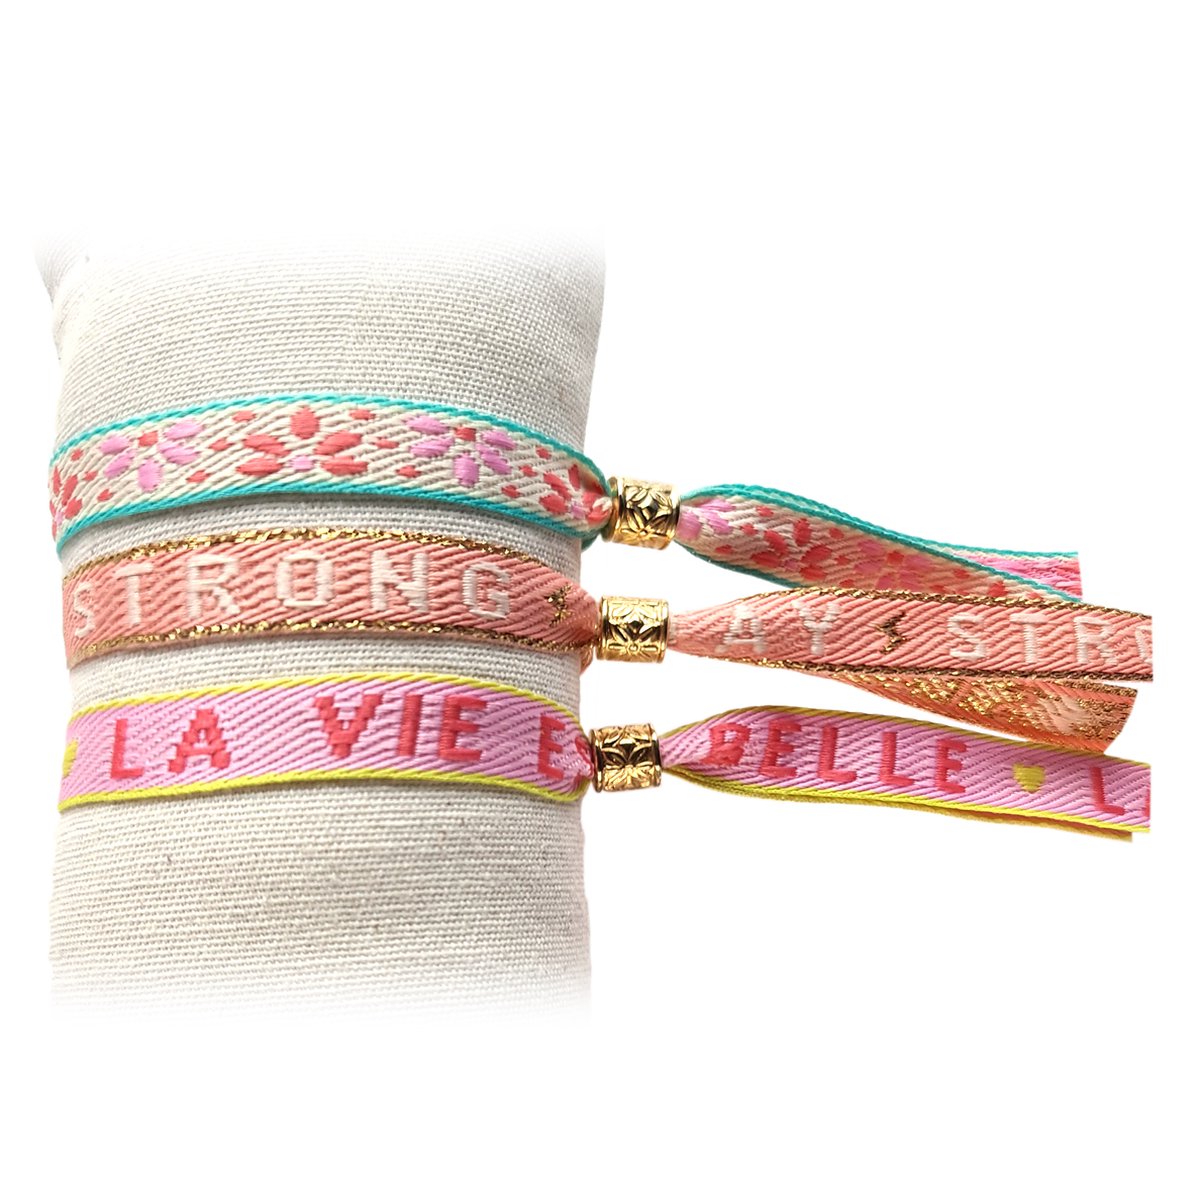 Principessa set van 3 trendy Festival lint armbandjes met tekstlint - Tekst: Flora, Stay Strong, La Vie est Belle - Kleur: Ivoor, Lichtroze, Peach